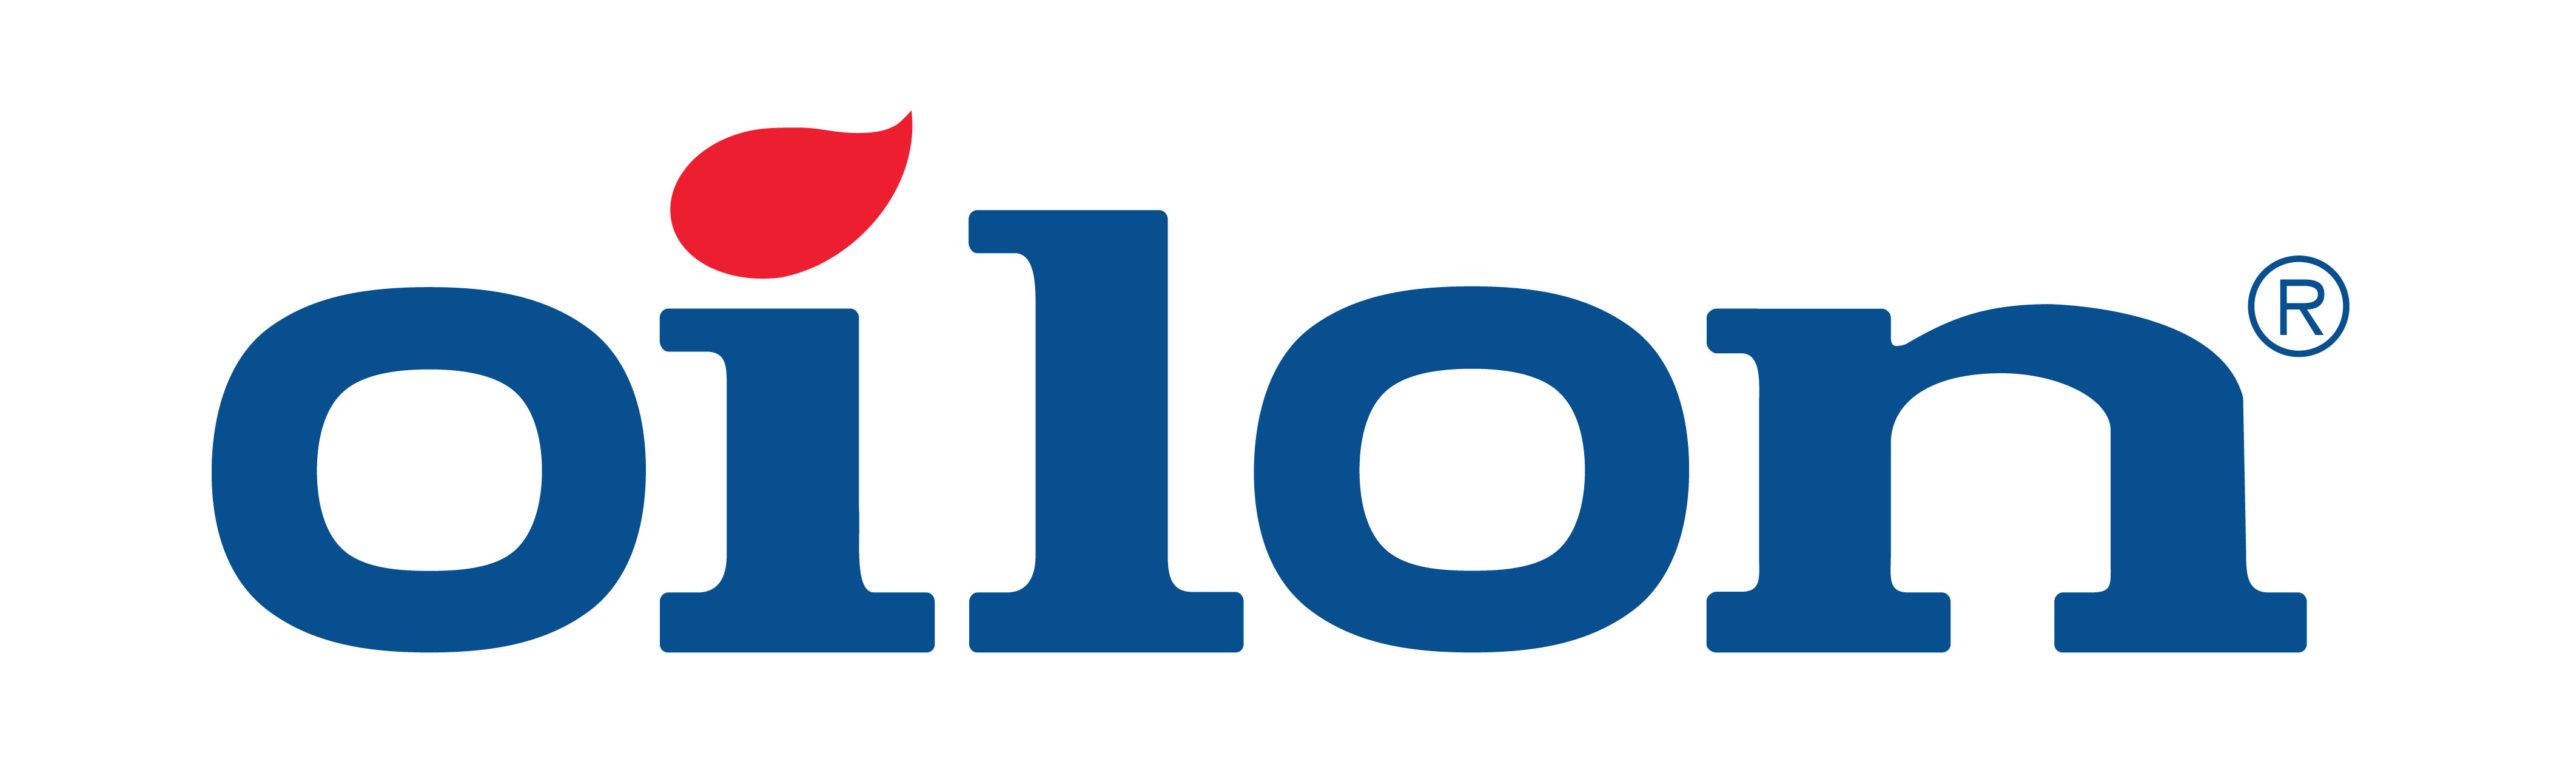 Oilon logo blue scaled